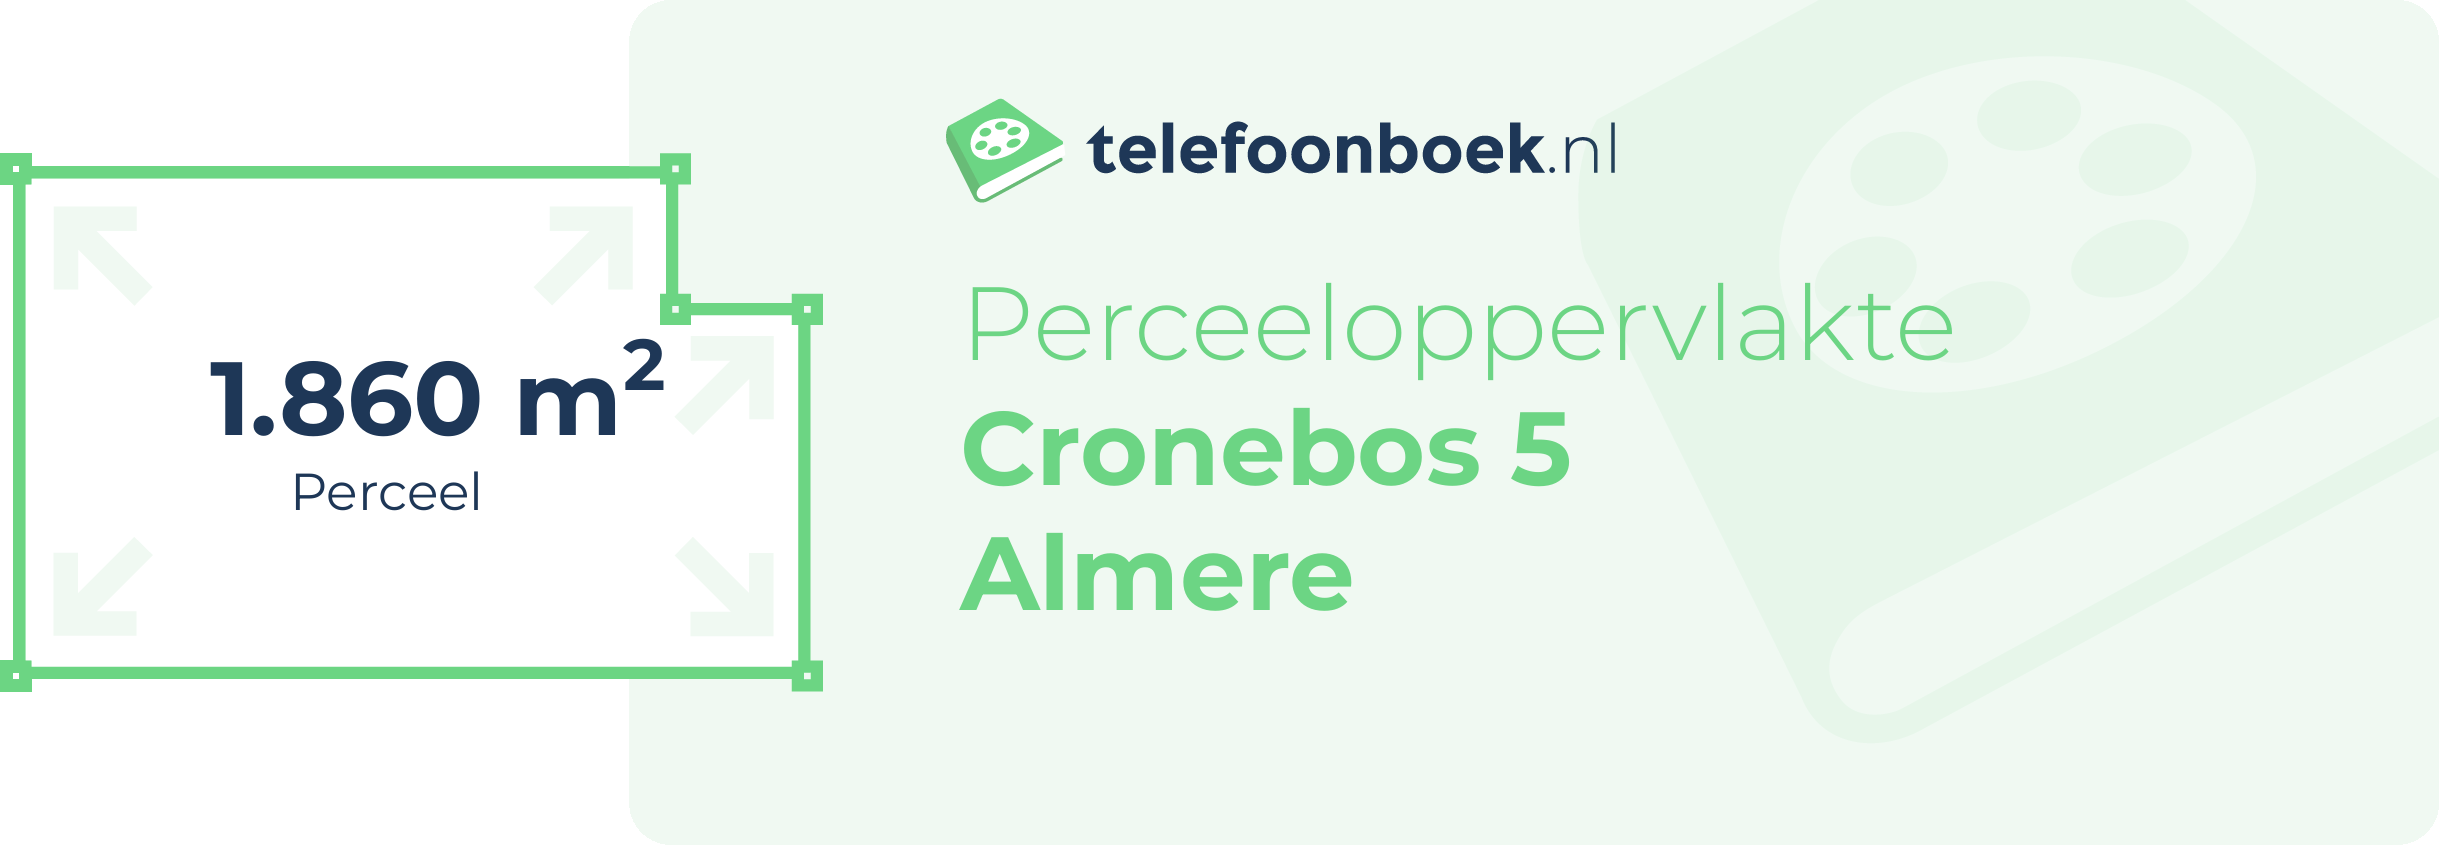 Perceeloppervlakte Cronebos 5 Almere